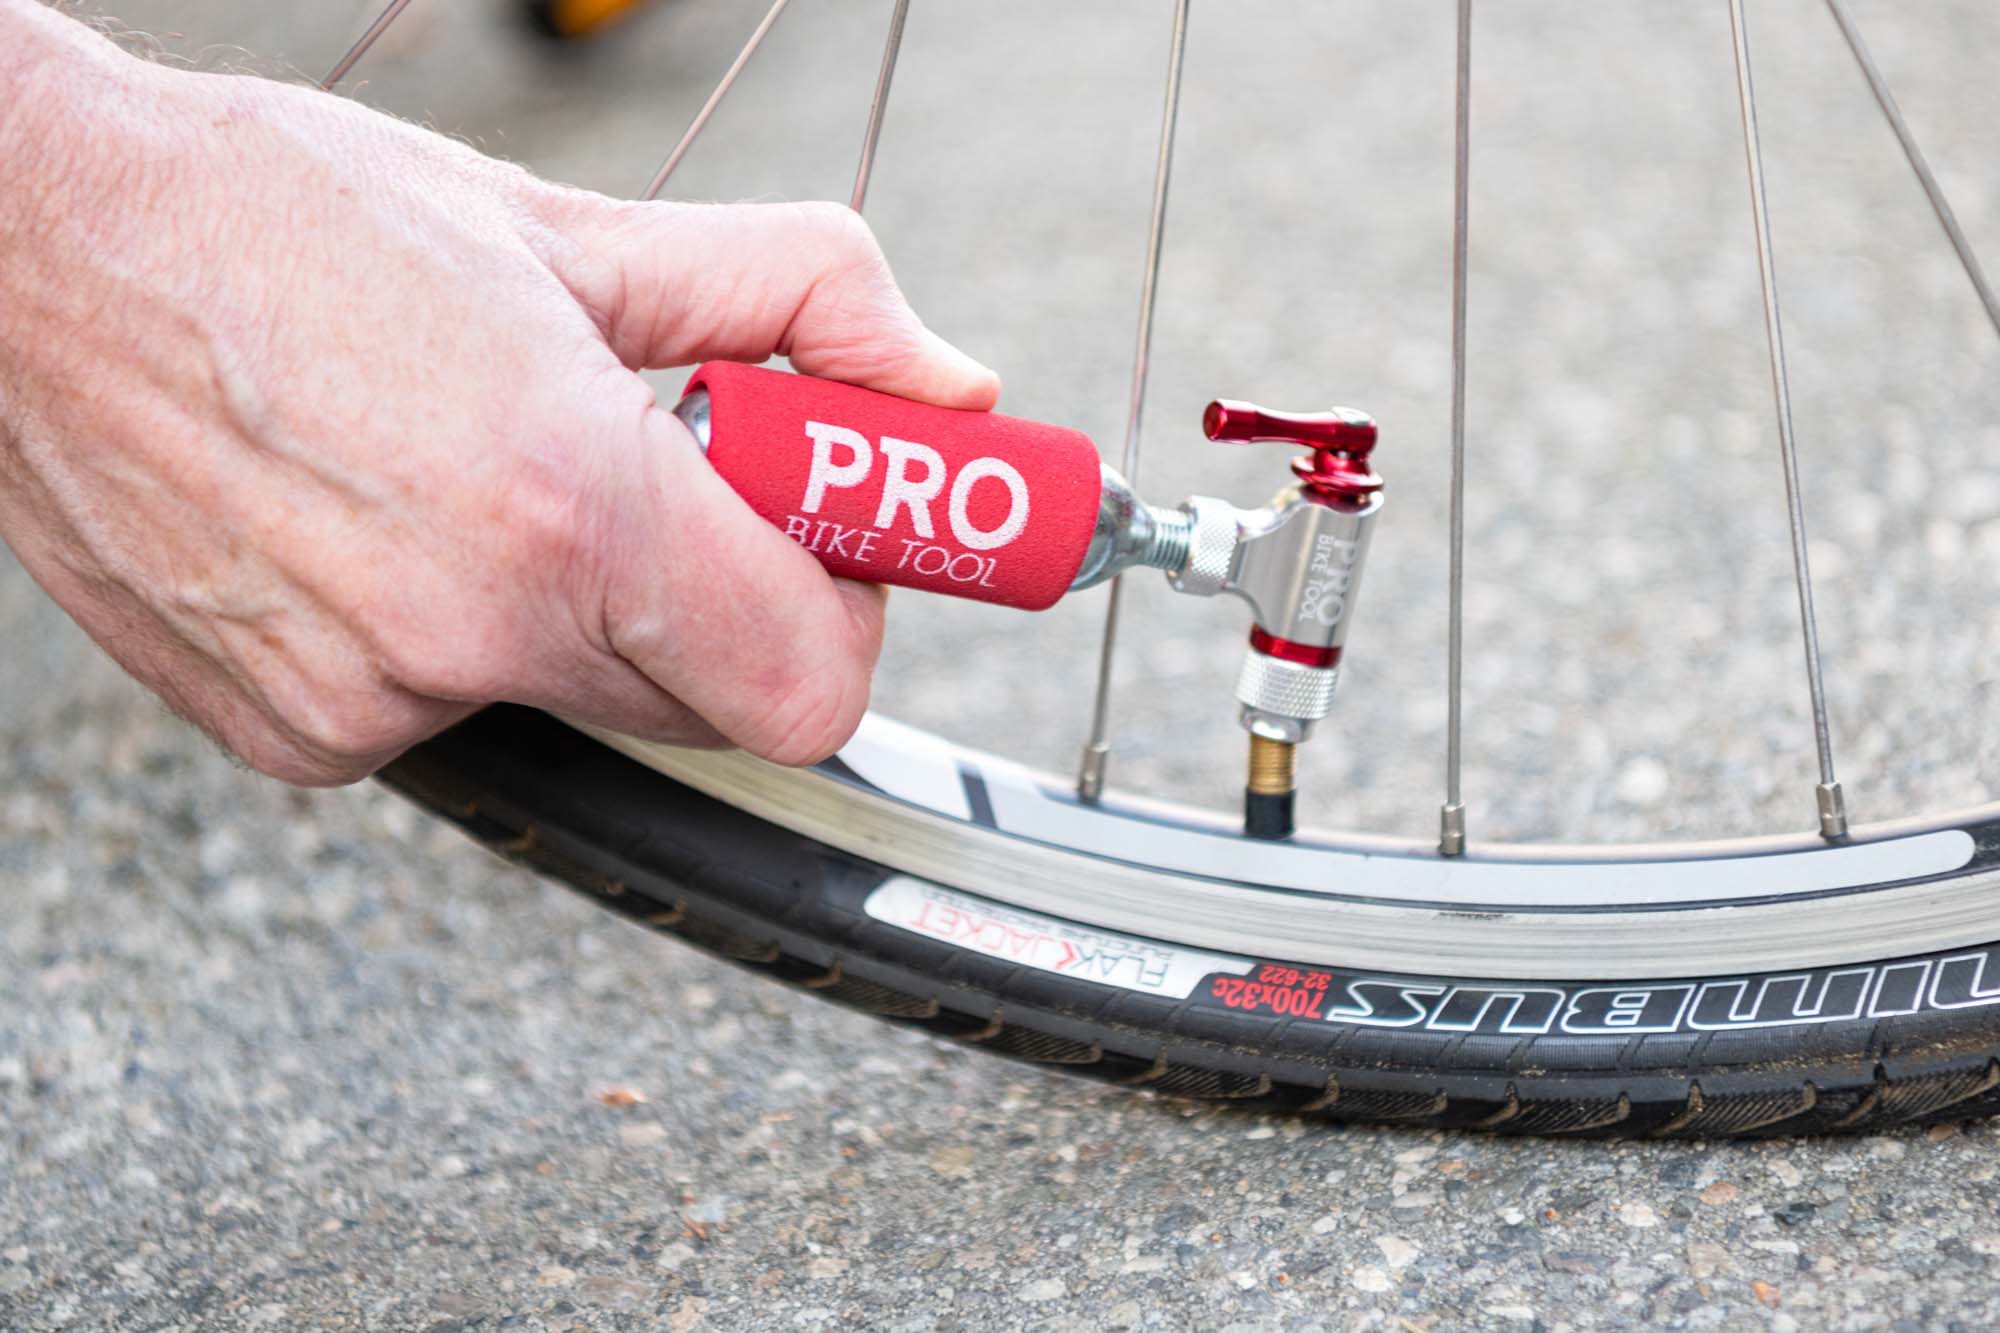 pro bike tool bike pump with gauge